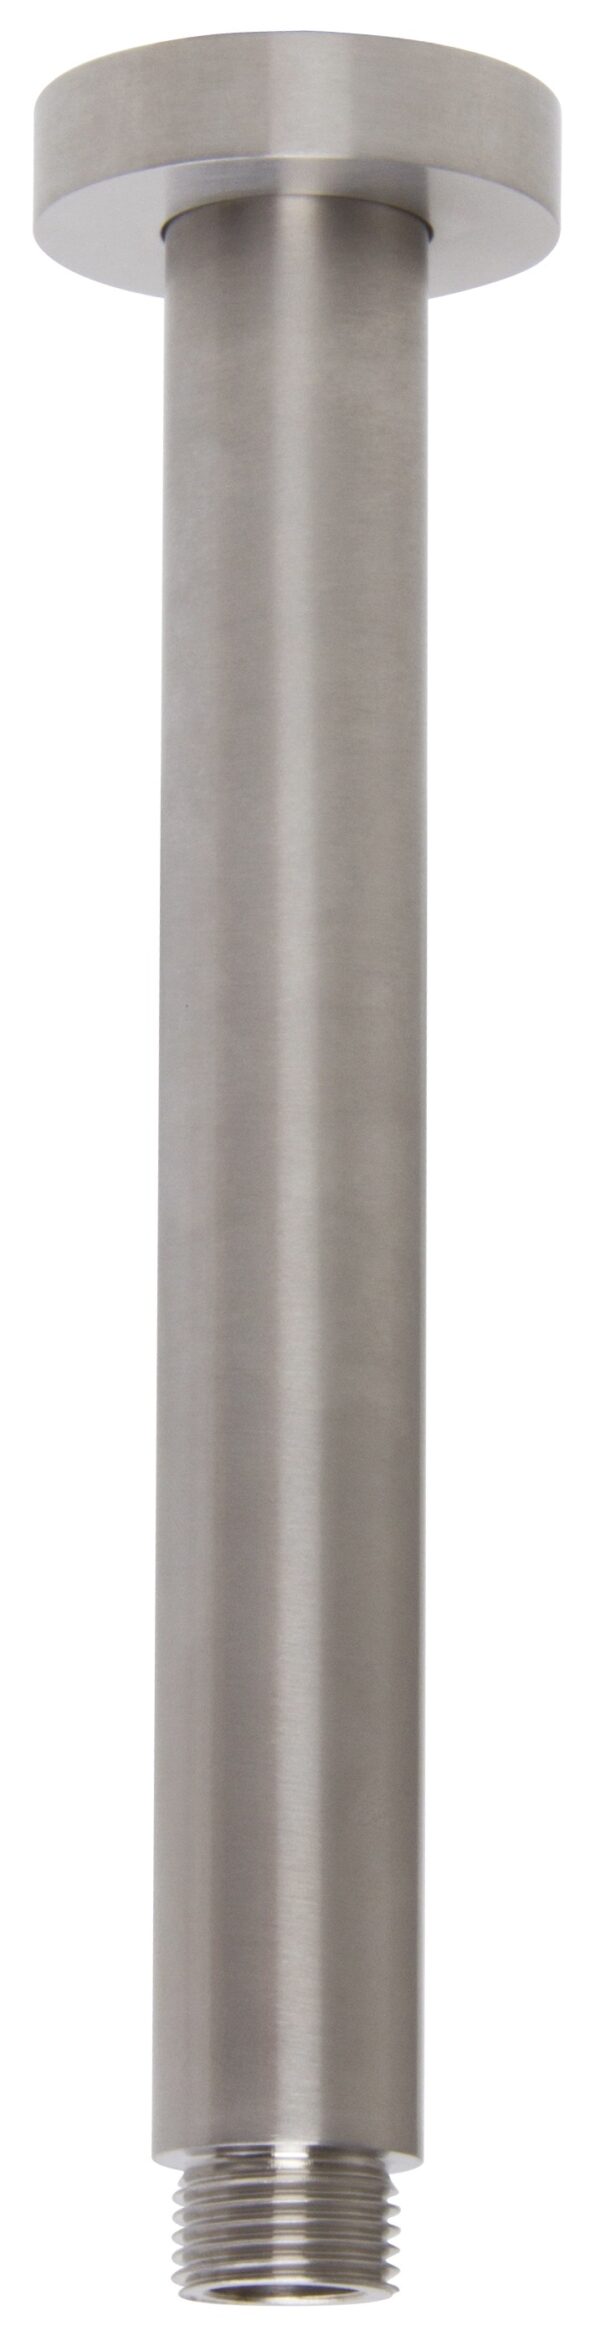 Sanisale - Fima serie Spillo Steel inbouw plafondarm 15cm tbv hoofddouche inox